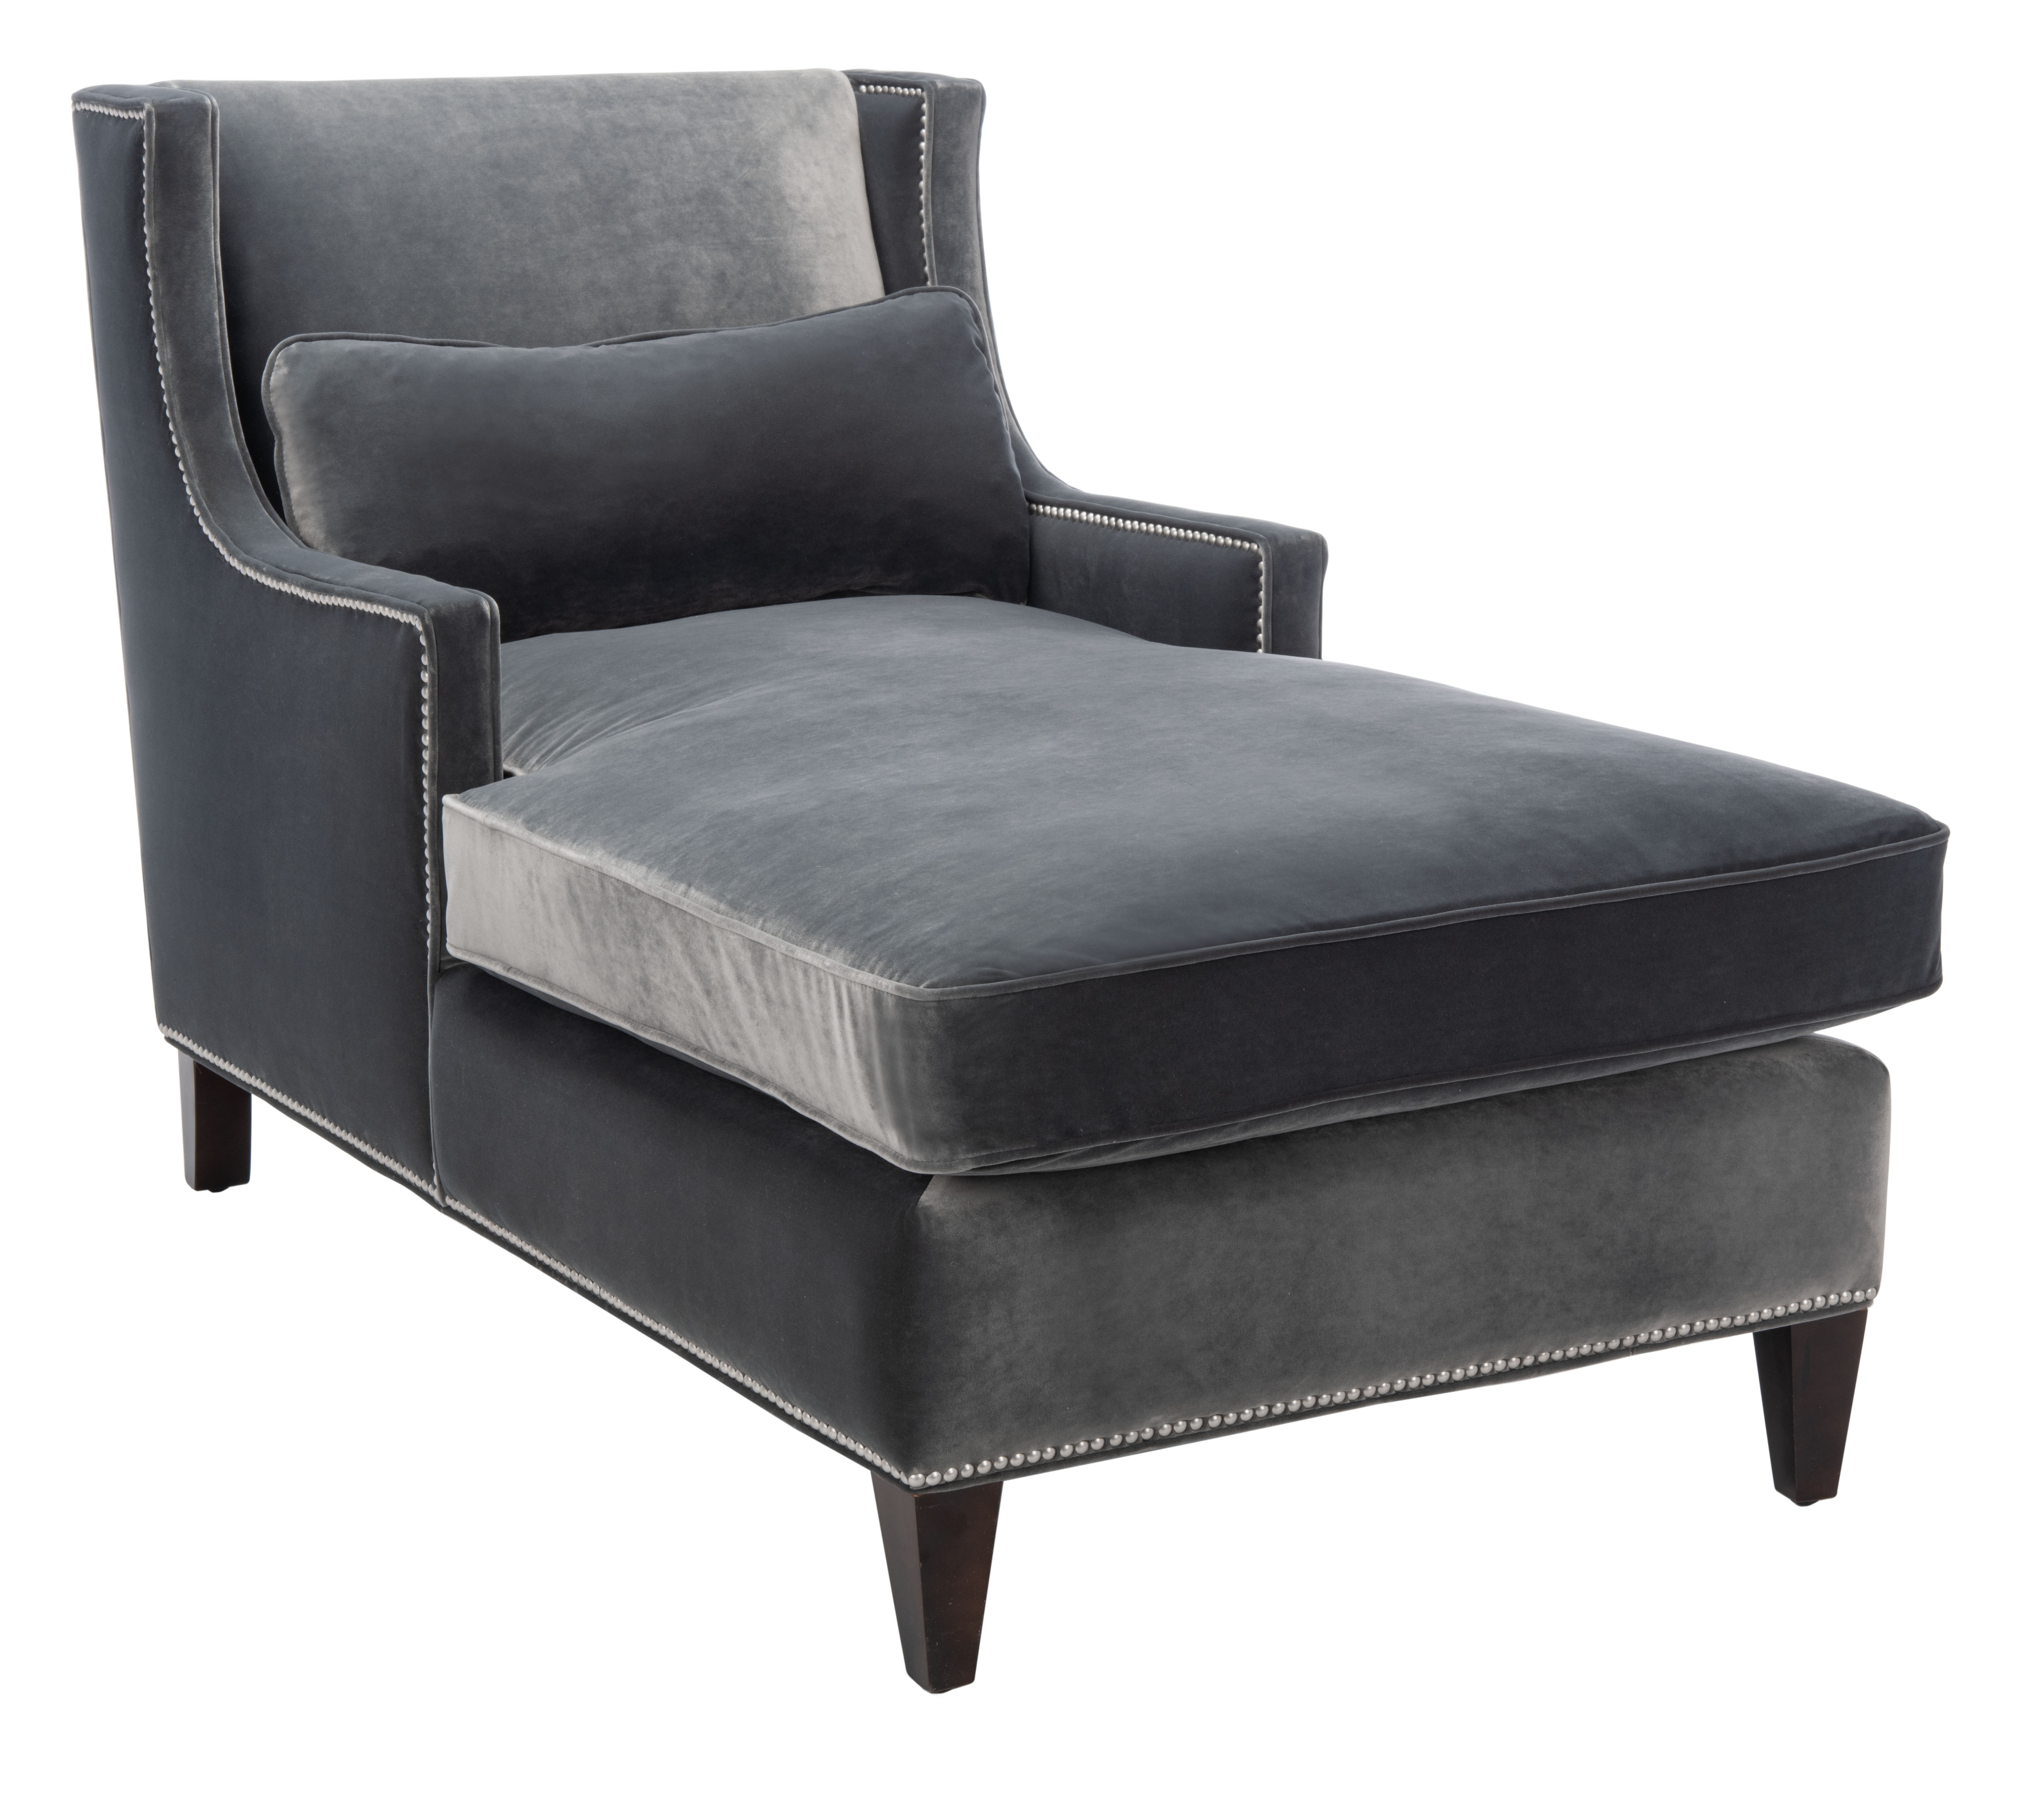 Vitali Studded Chaise - Charcoal - Arlo Home - Image 5